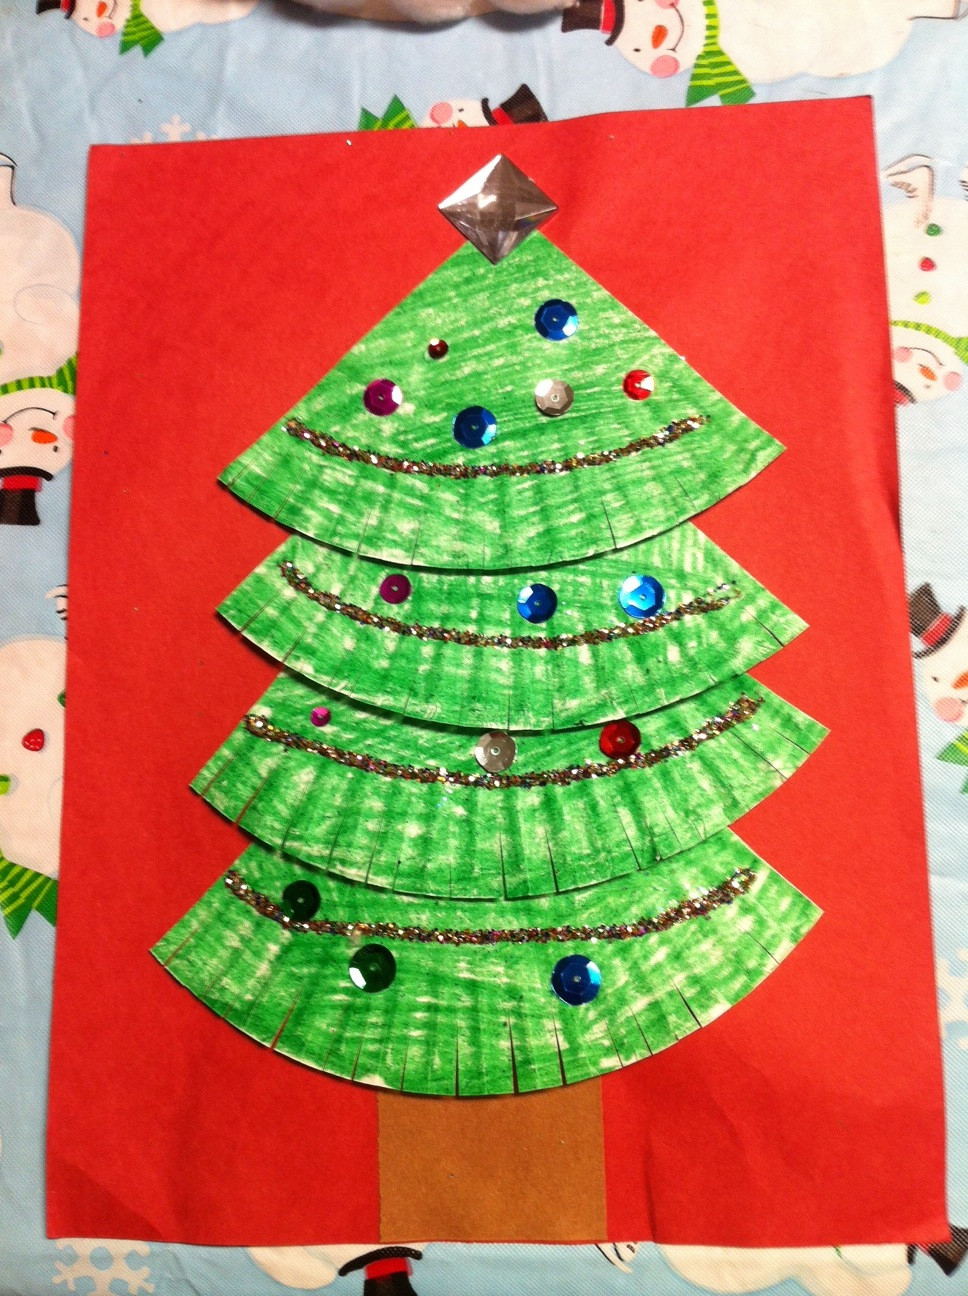 Christmas Artwork Ideas For Toddlers
 Kindergarten Kids At Play Fun Winter & Christmas Craftivities